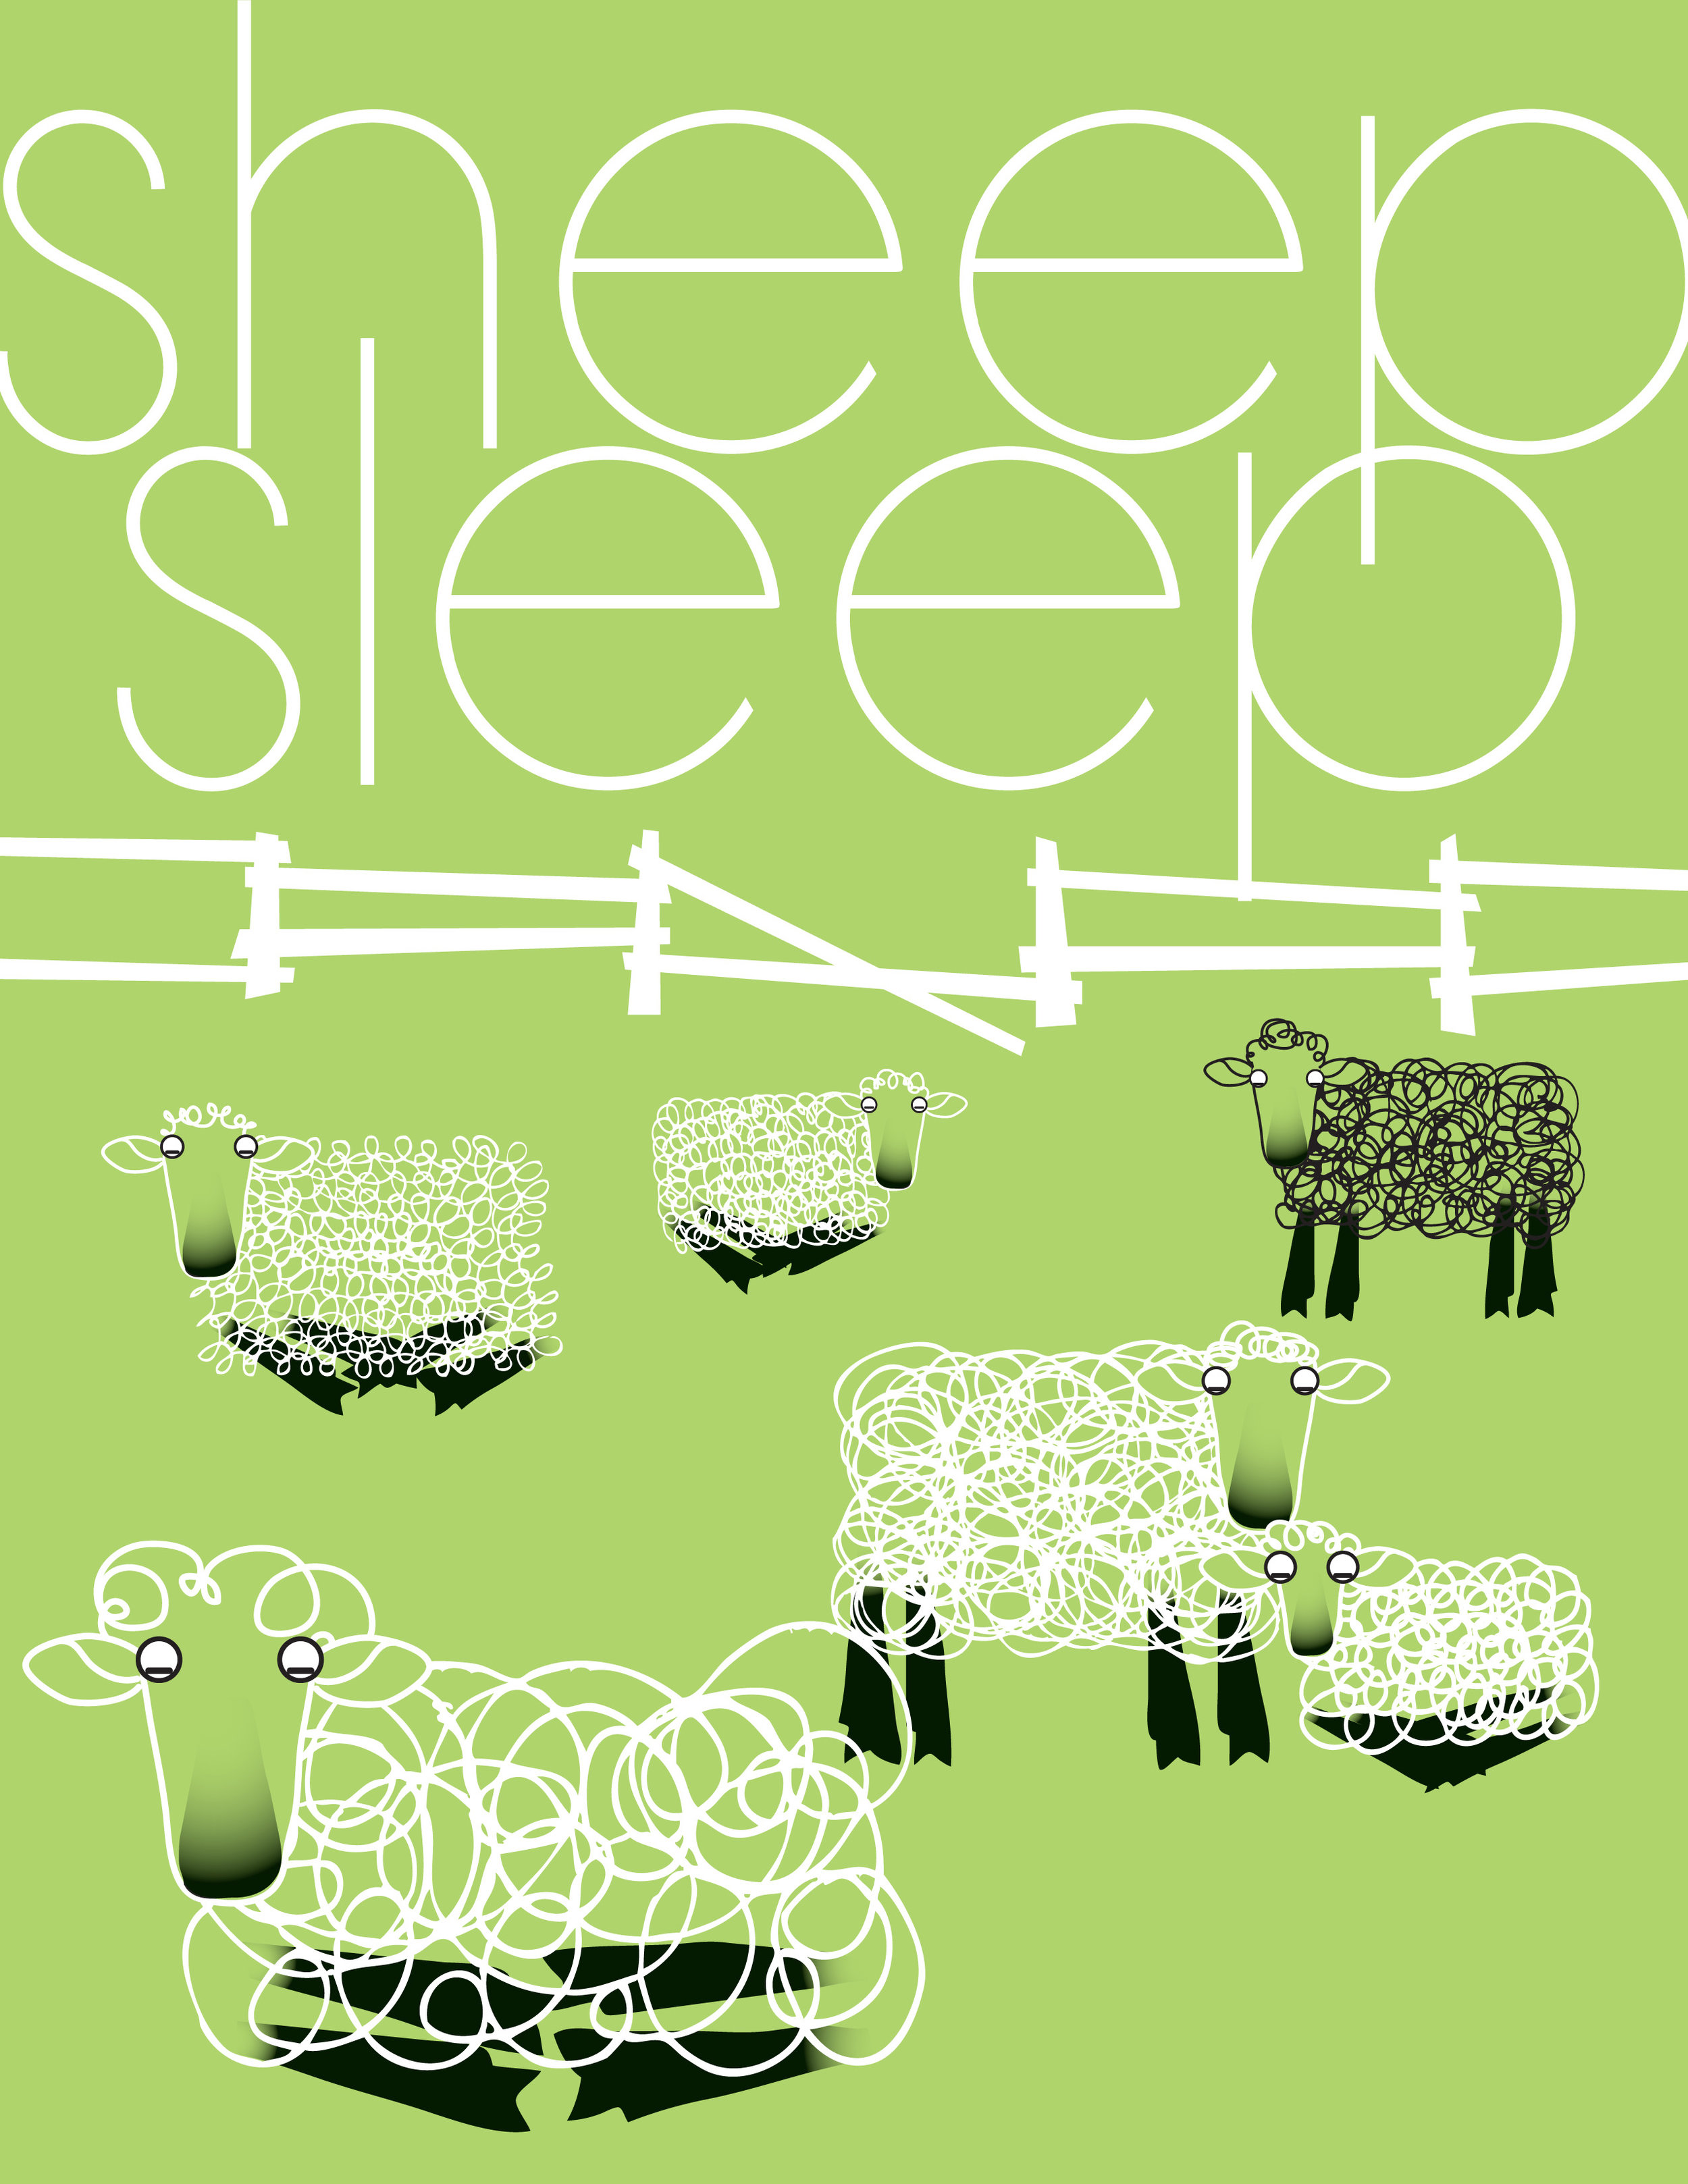 Sheep Sleep Book 2-2.jpg